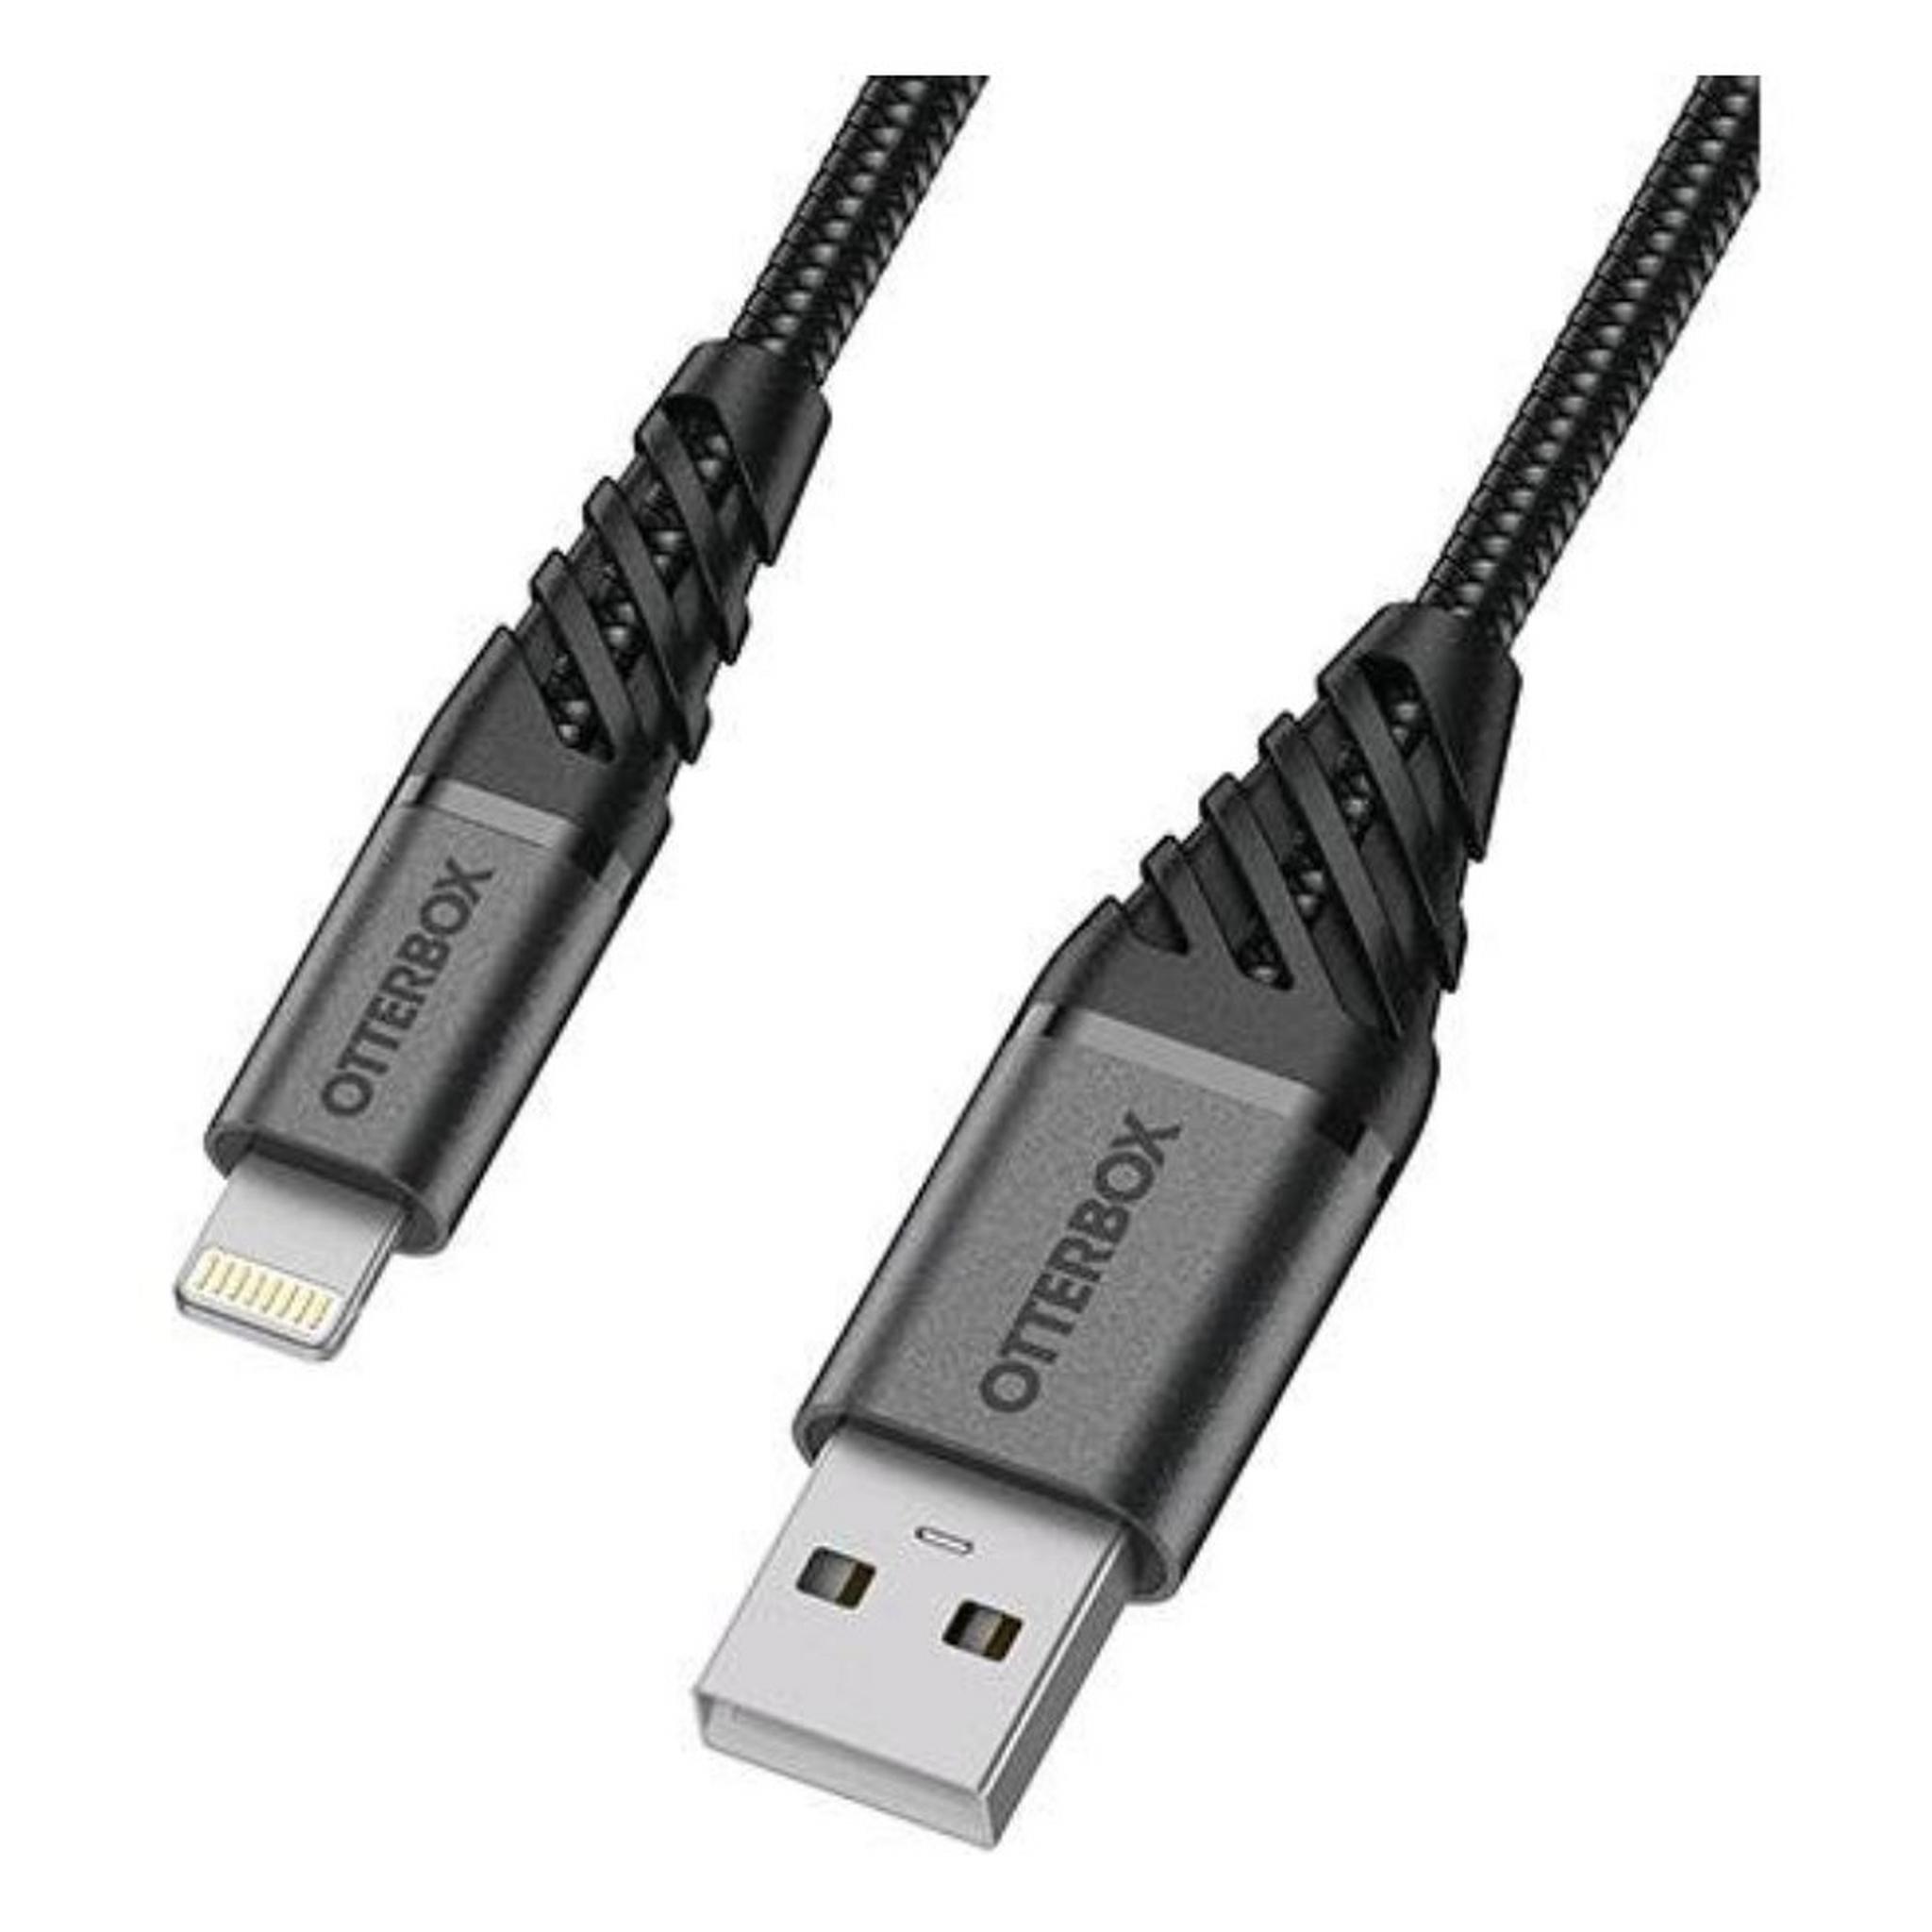 OtterBox Premium USB-A Lightning Cable 1-Meter (78-52643) - Black